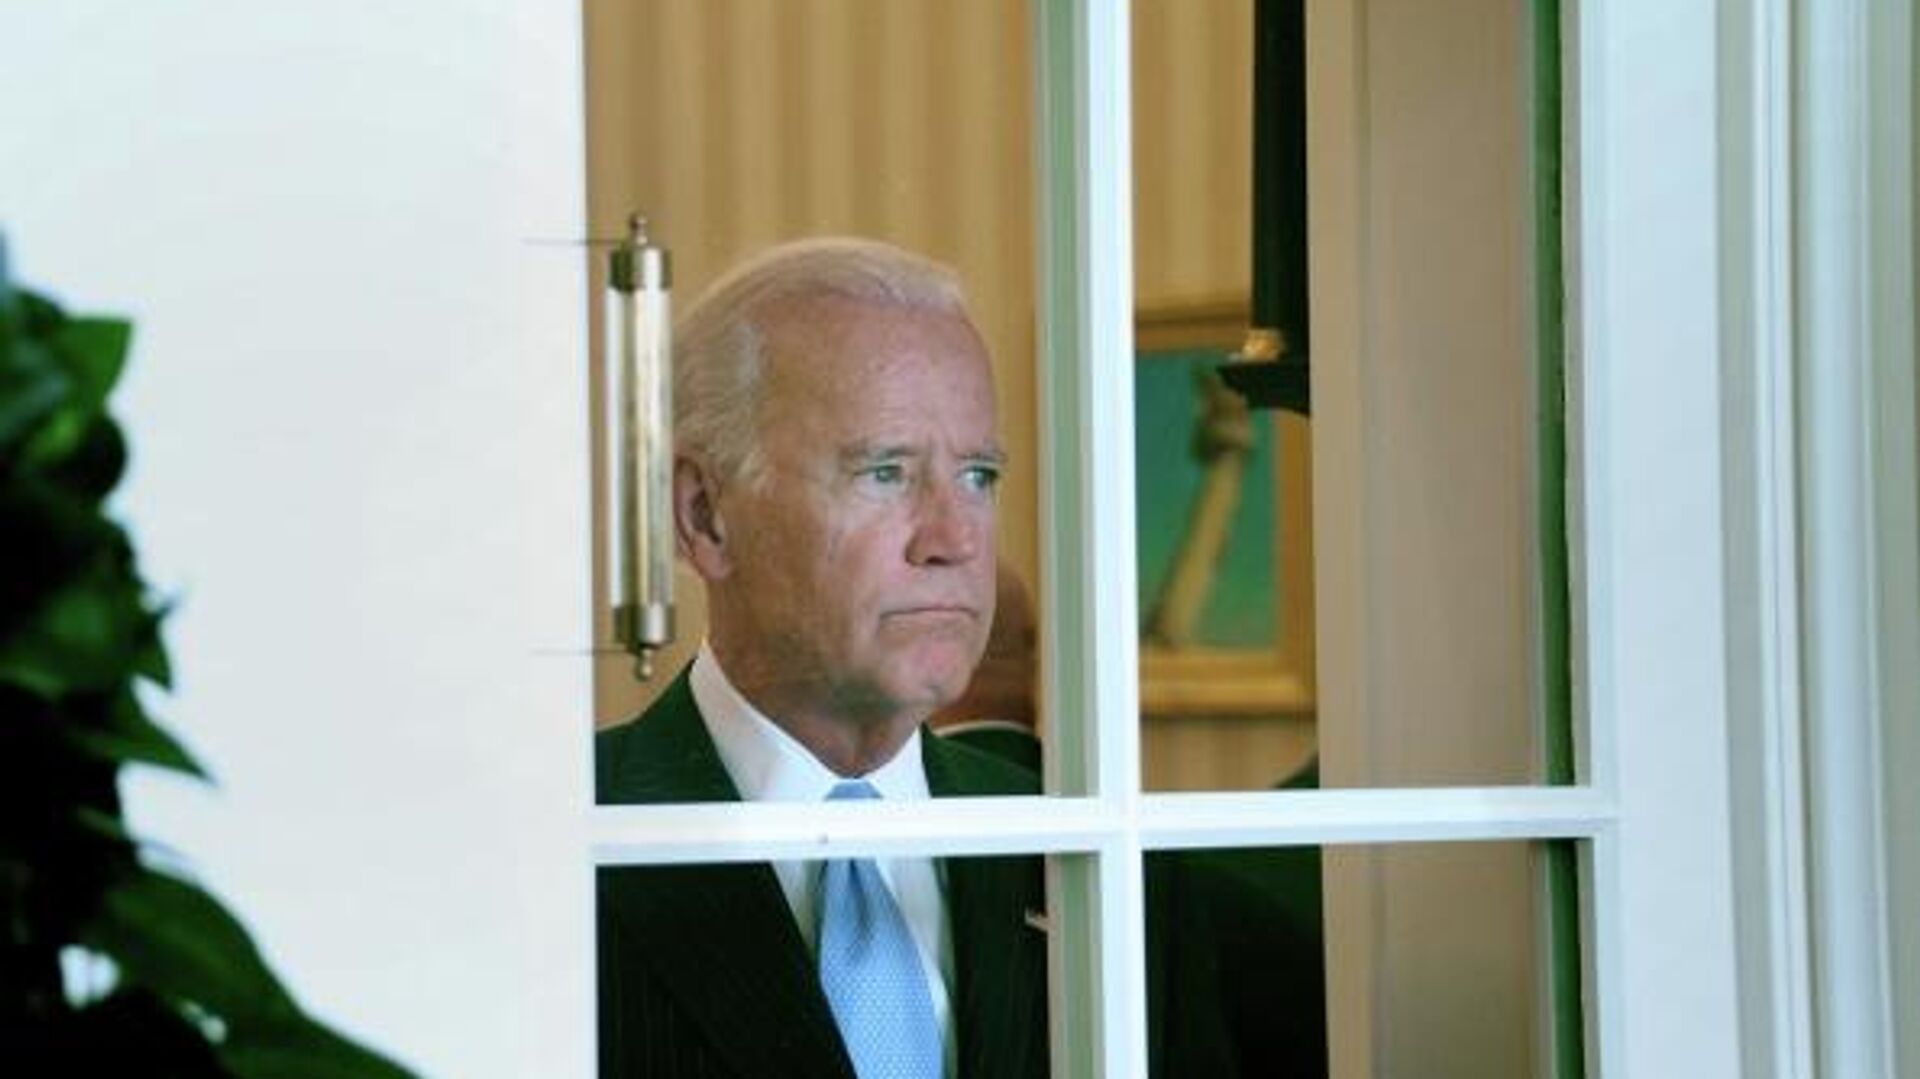 Sad Joe Biden photo from 2014. Source of endless internet memes. - Sputnik International, 1920, 11.06.2022